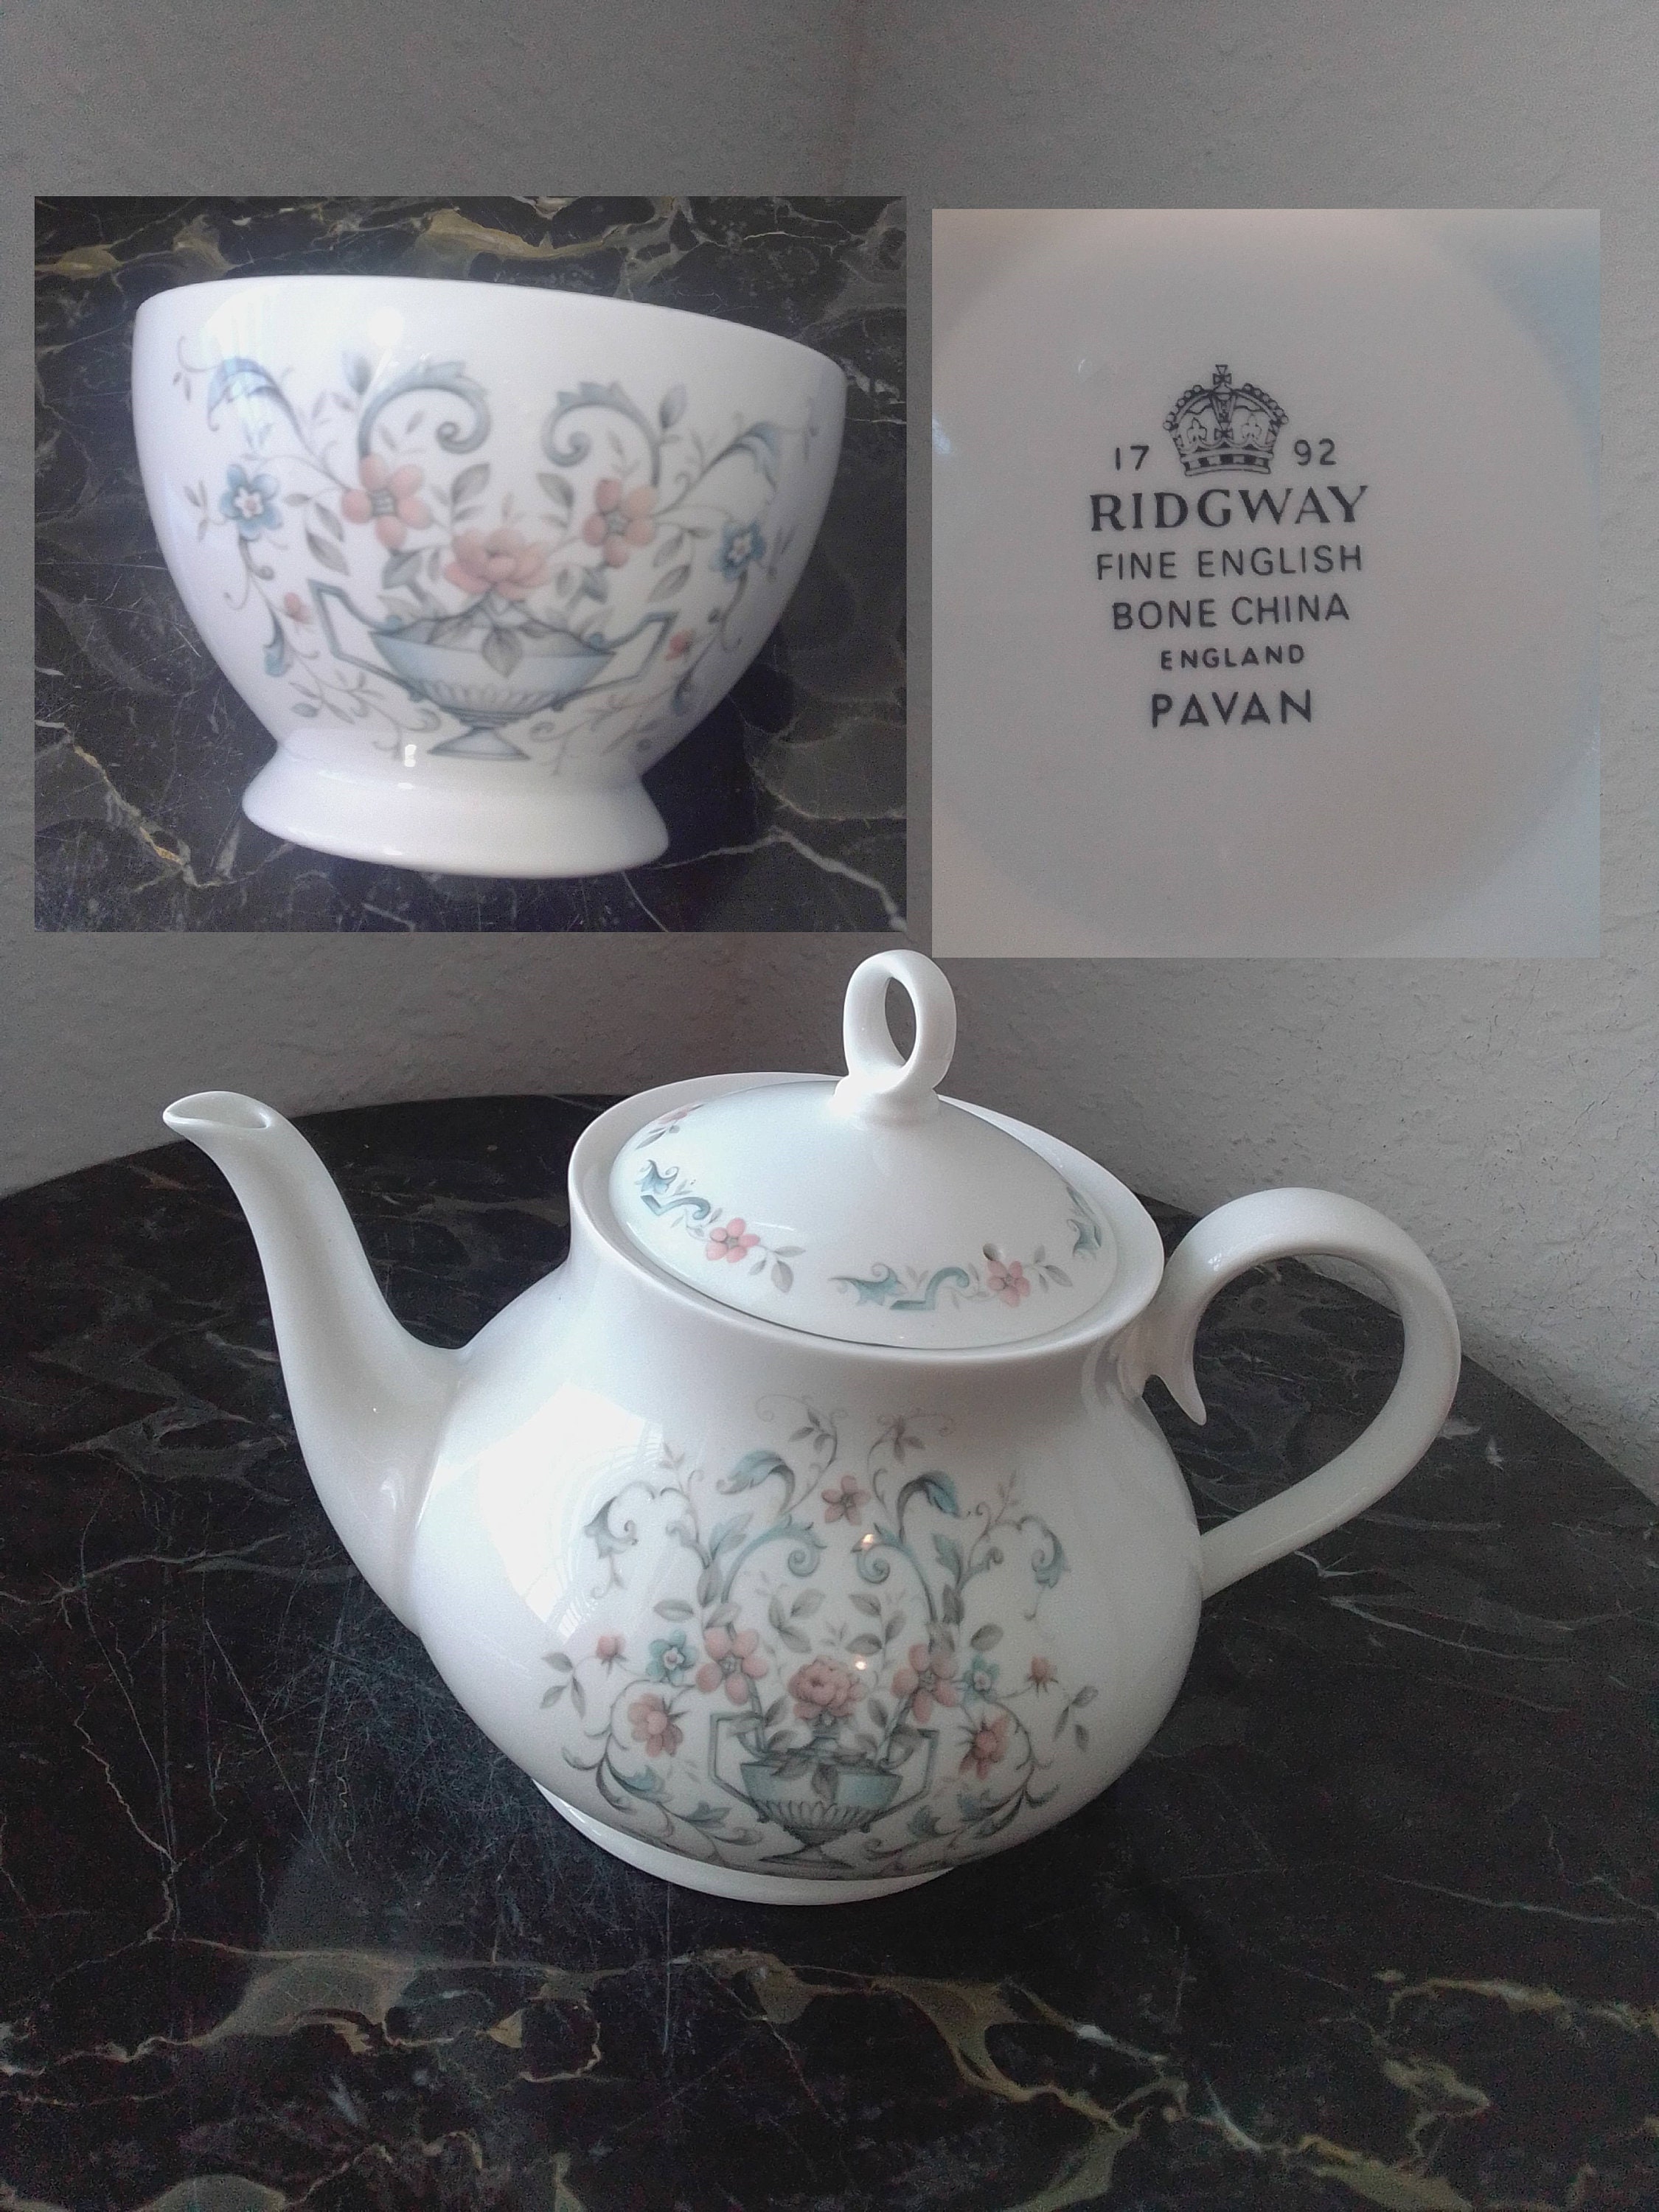 Ridgeway 1792 Fine English Bone China pavan Pattern Teapot and